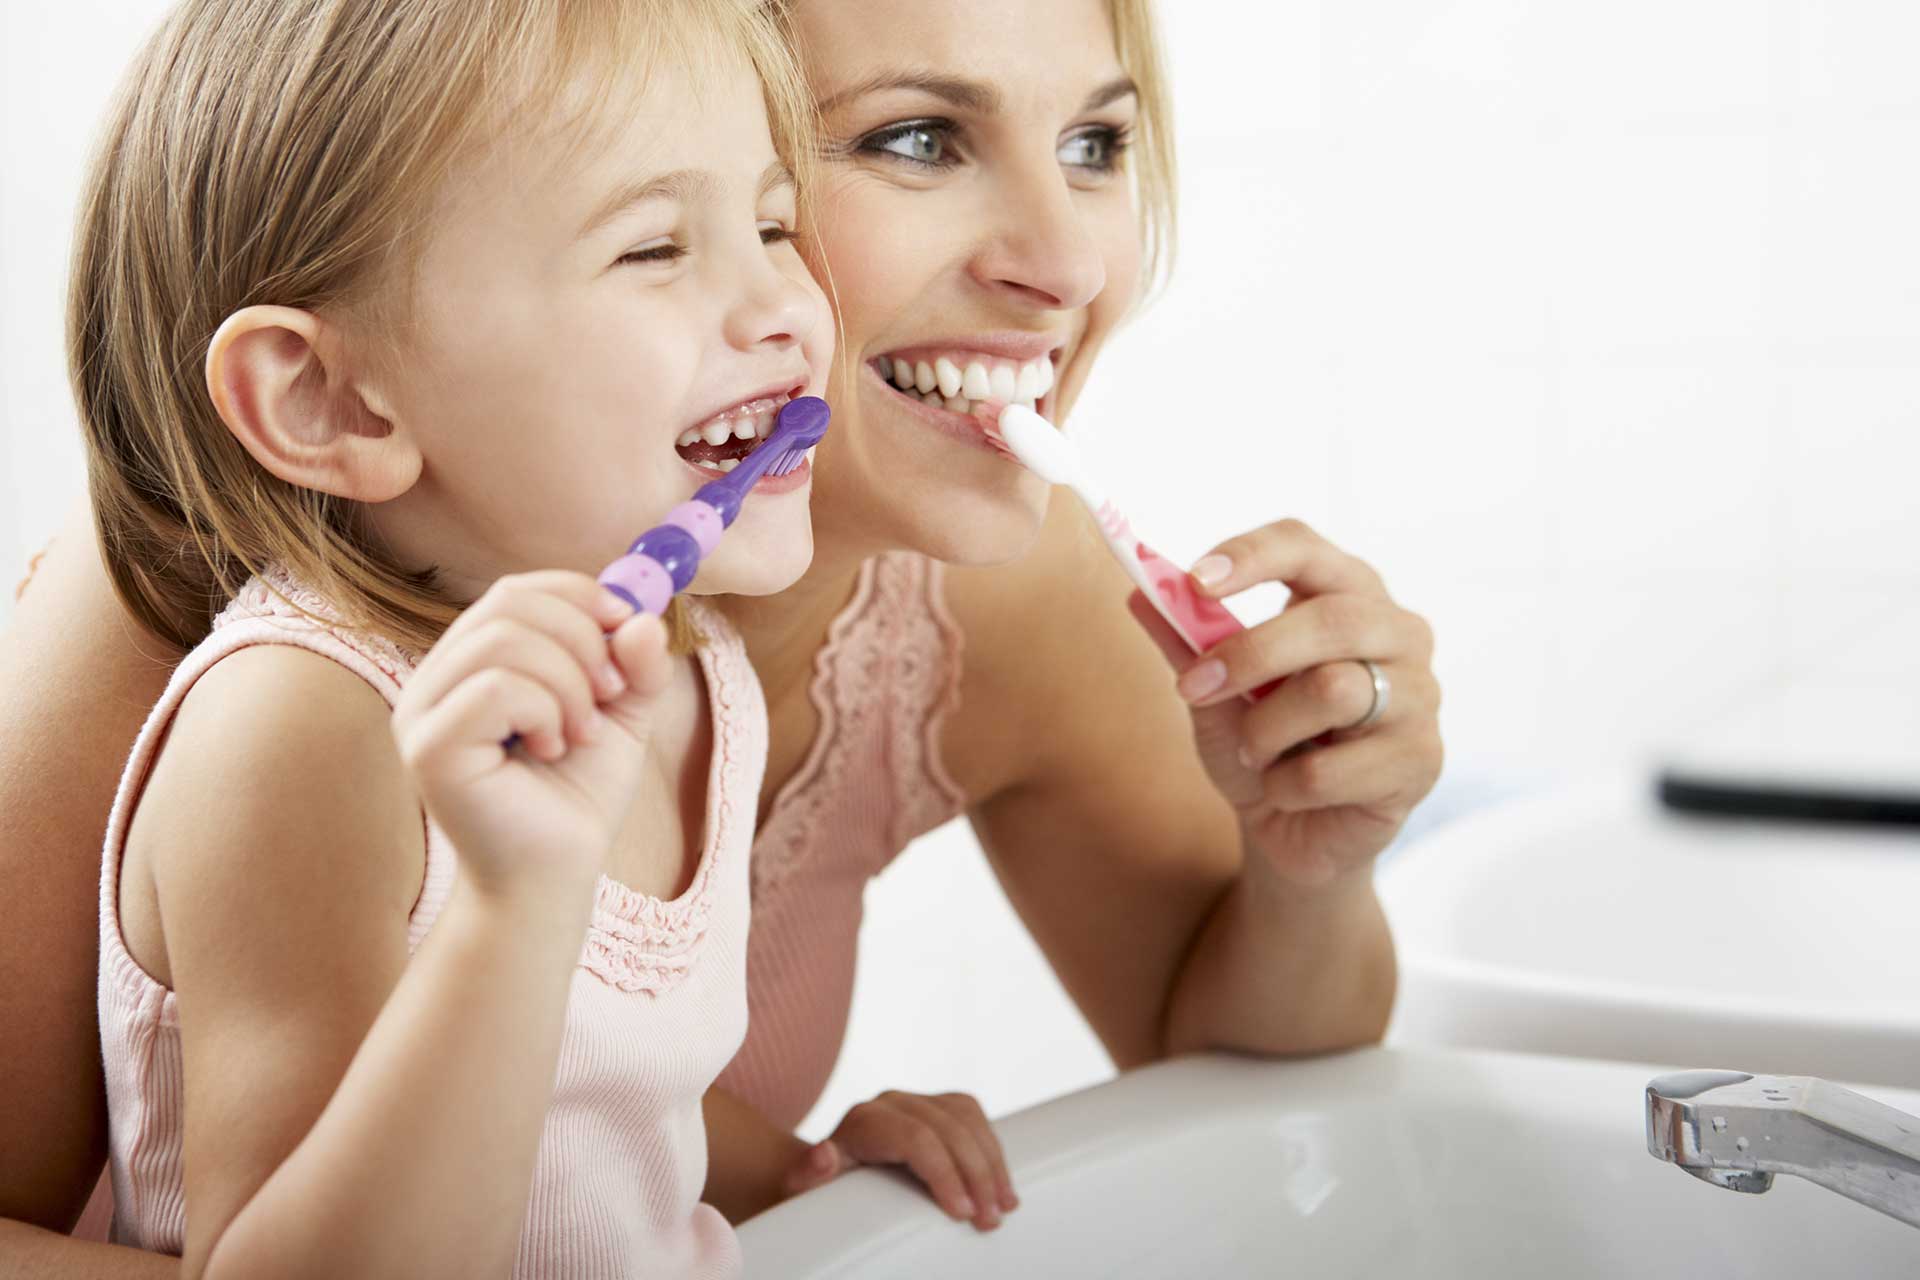 Guiding Children's Dental Health: Cultivating Positive Habits